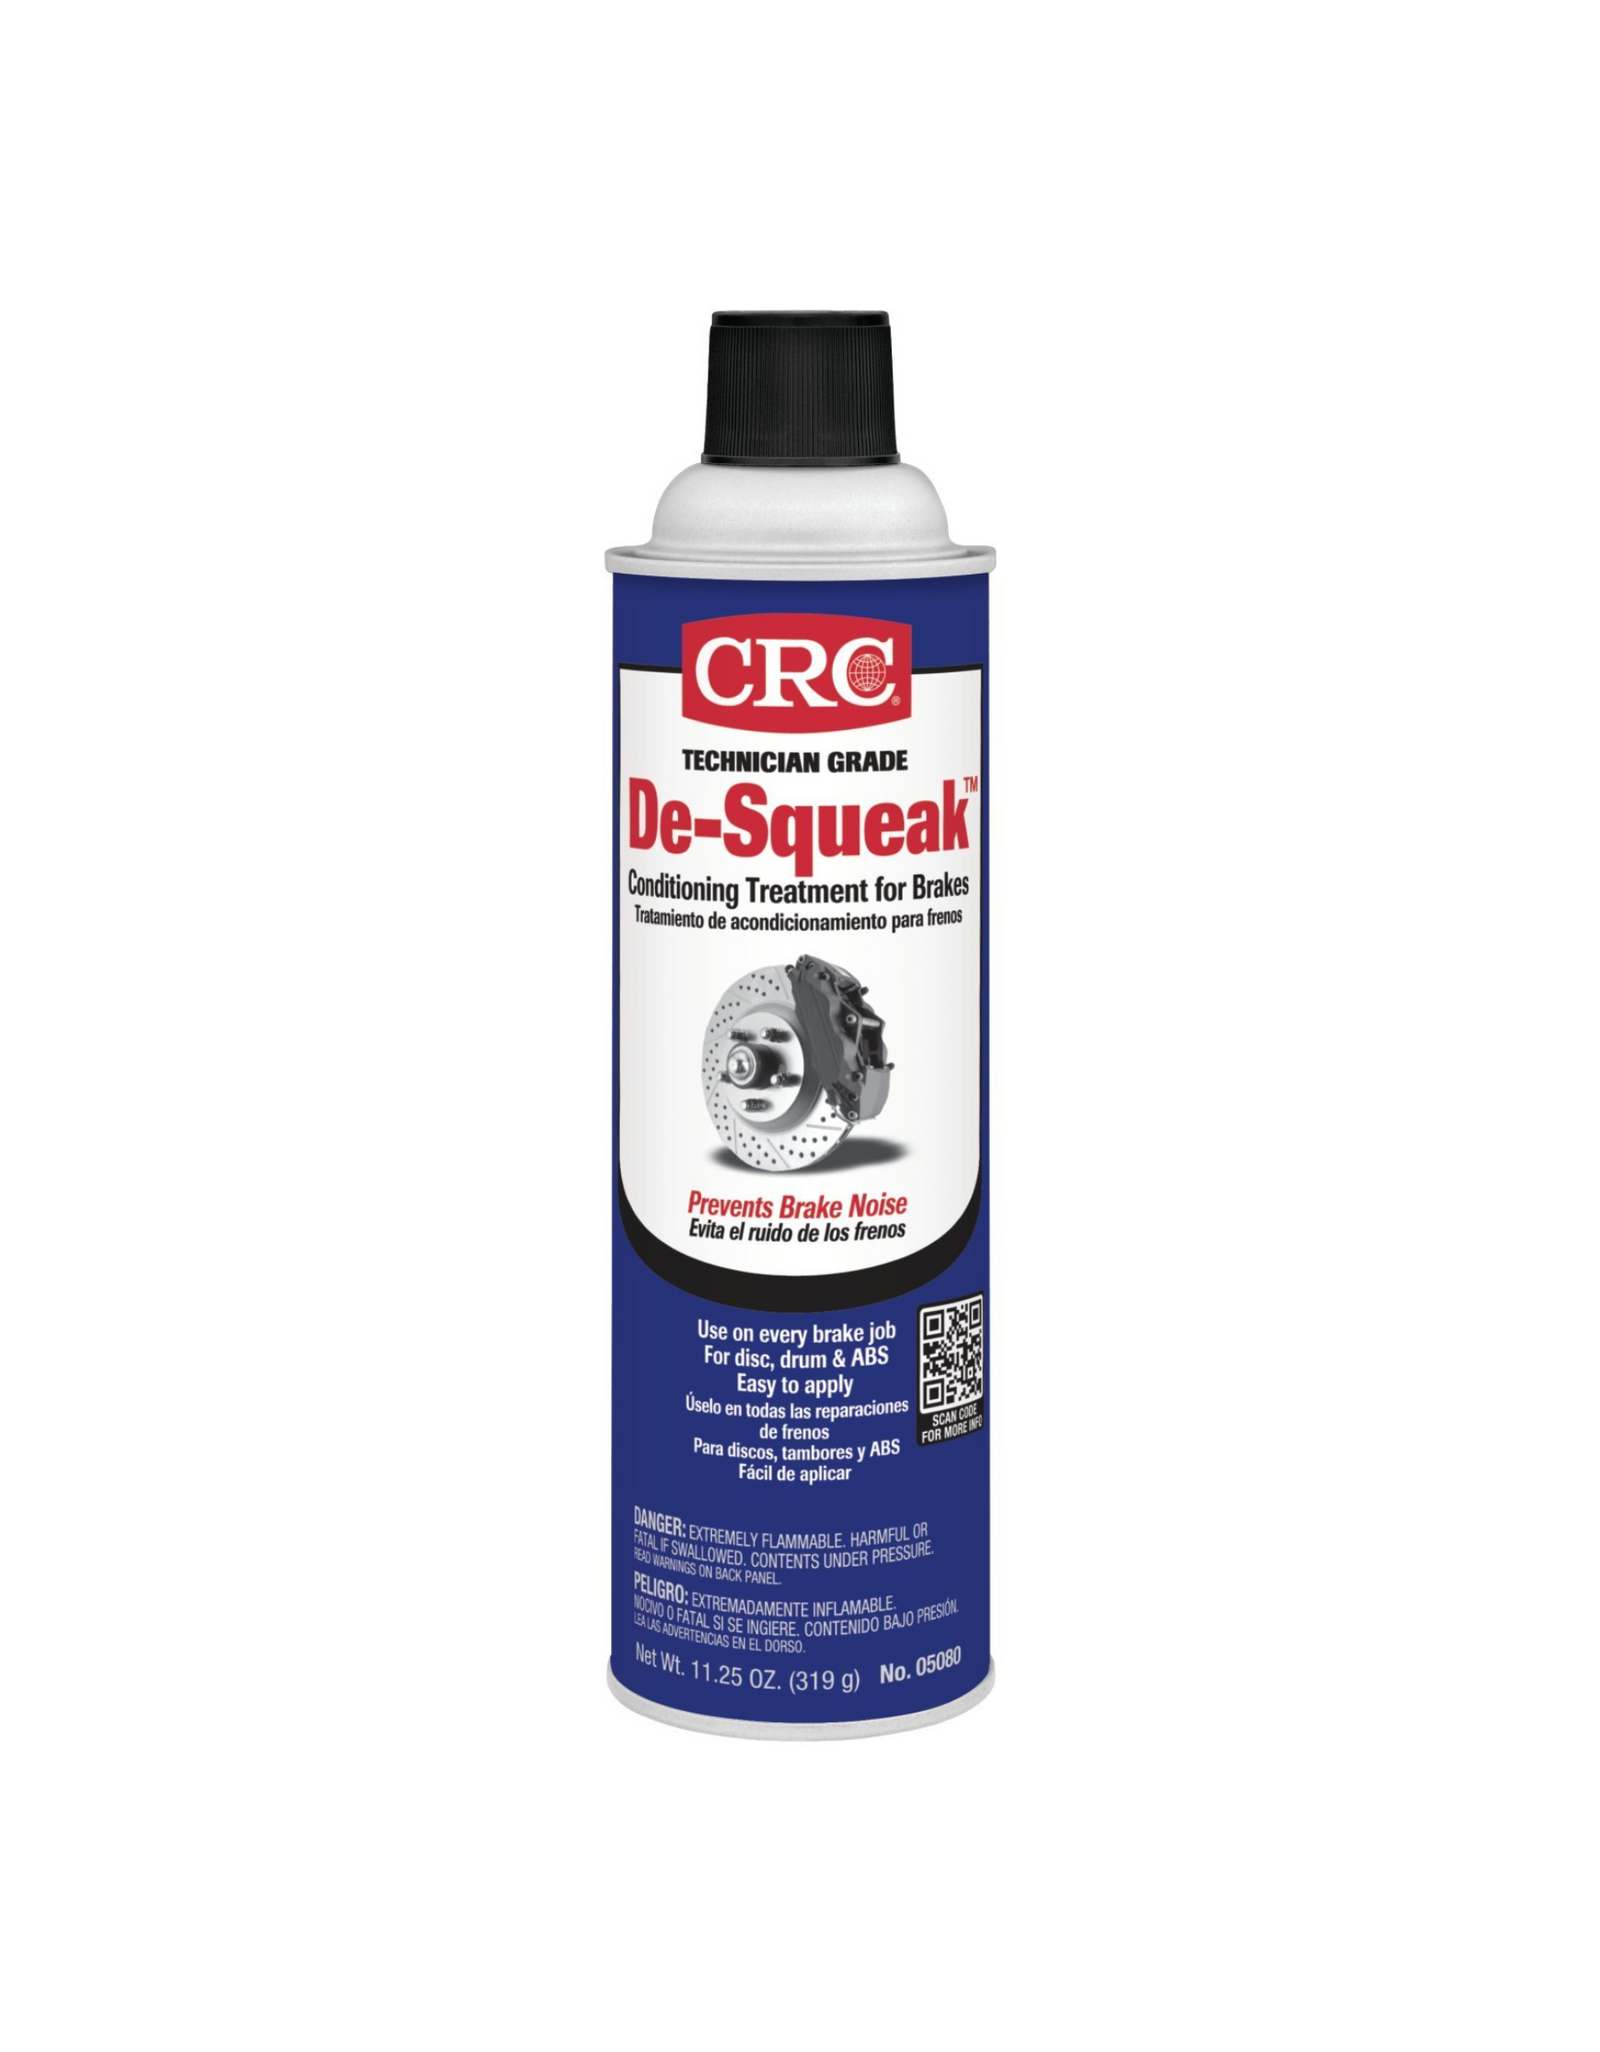 CRC 05080 De-Squeak Brake Conditioning Treatment for Brakes, 11.25 oz